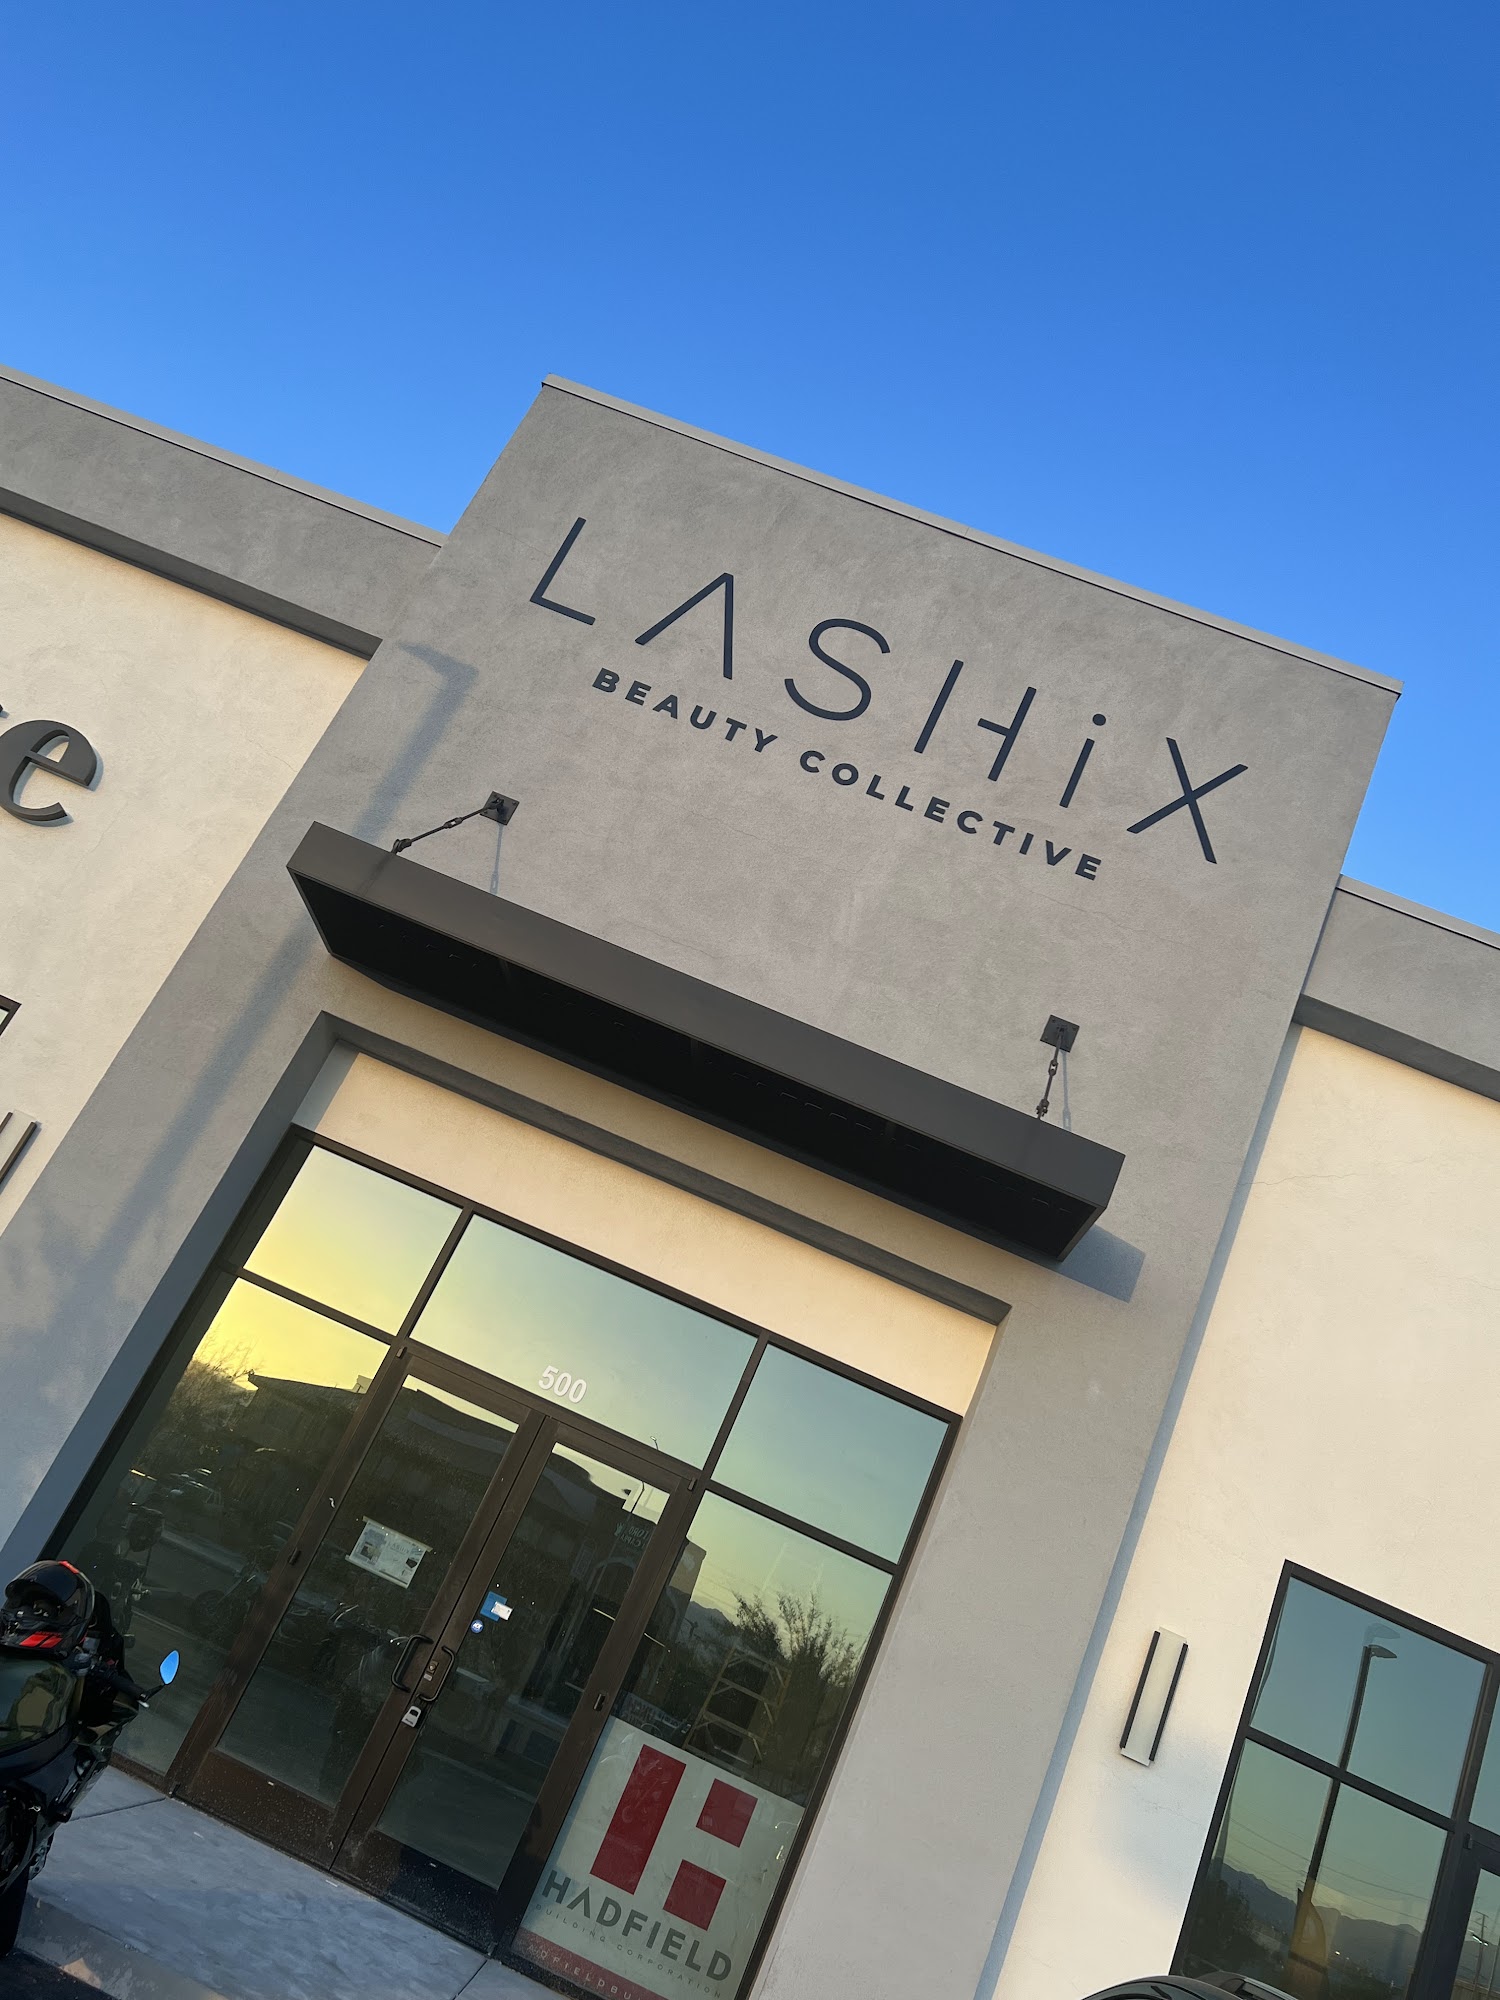 LASHiX Beauty Collective